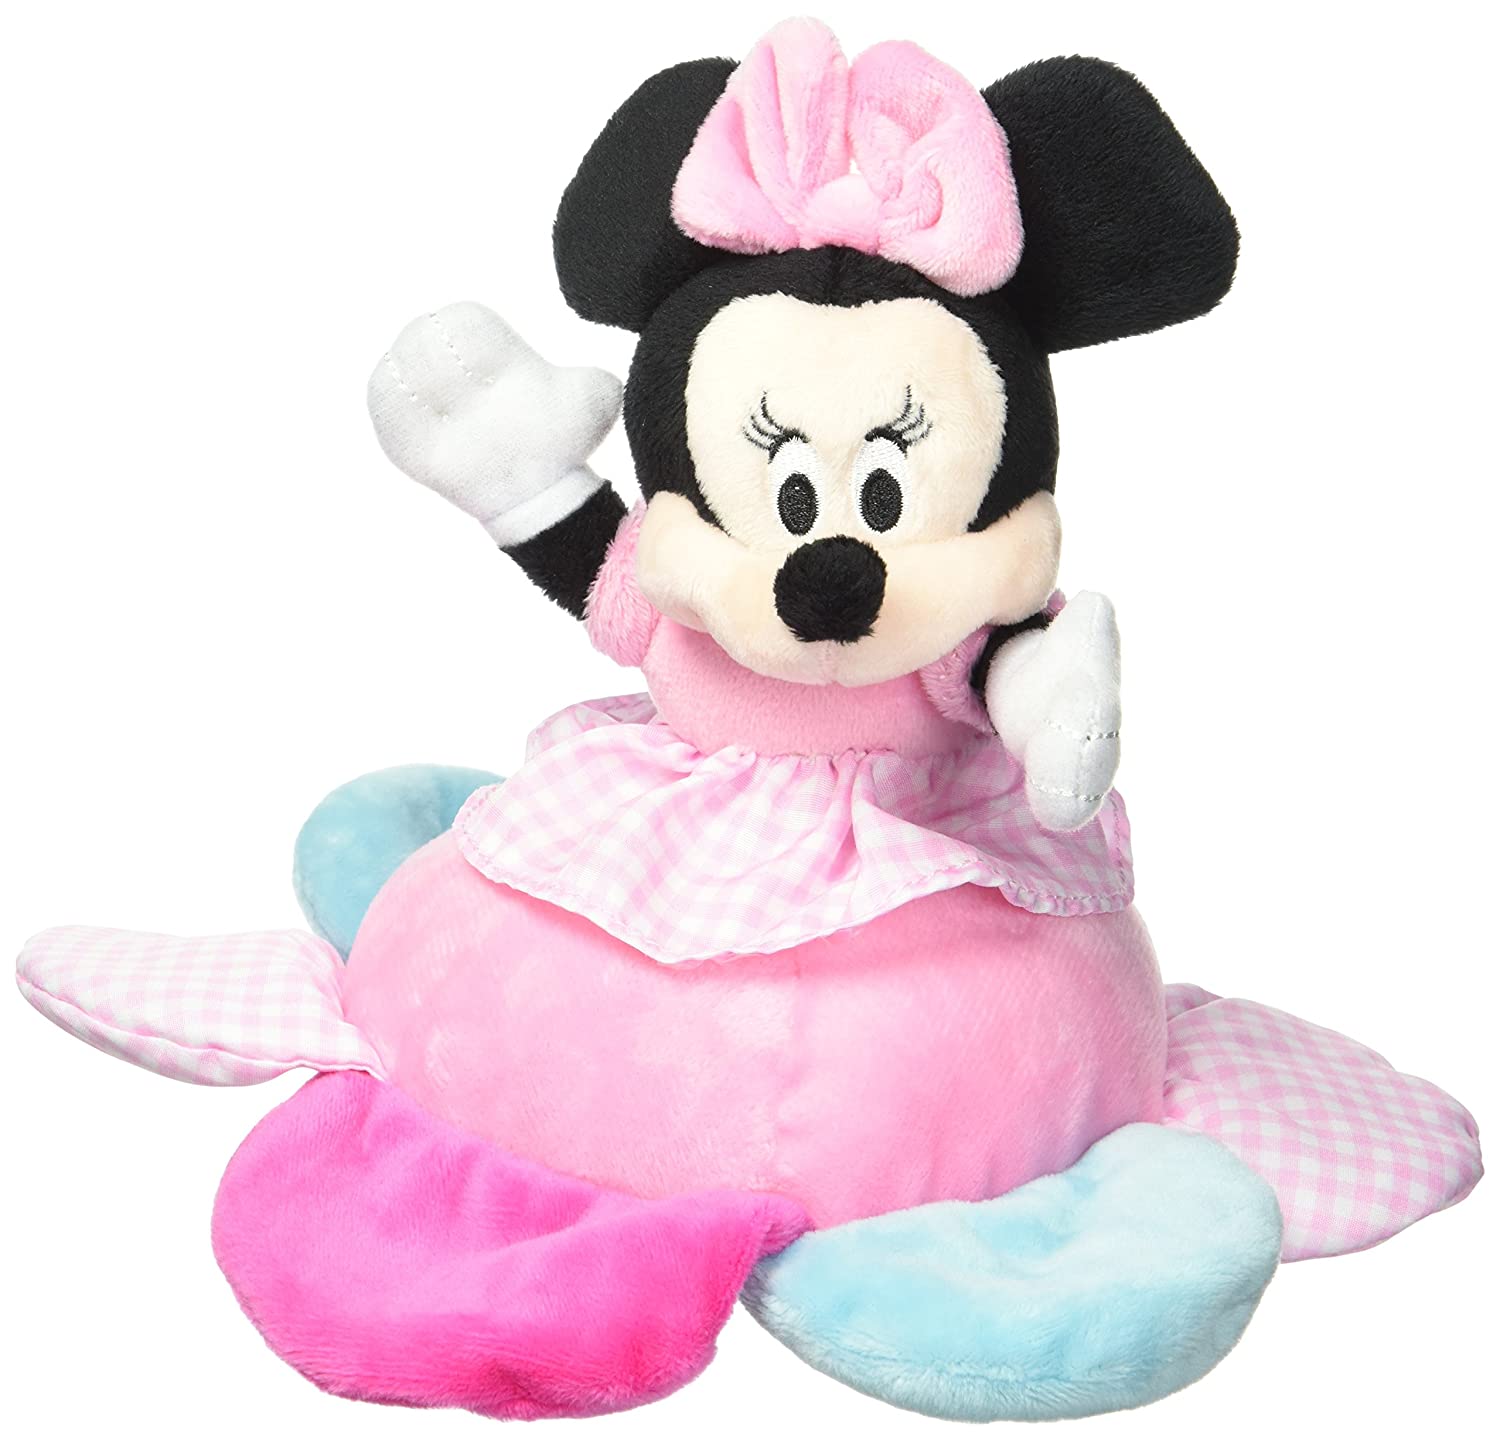 Kids Preferred Minnie Mouse Keywind Musical Plush, One Size